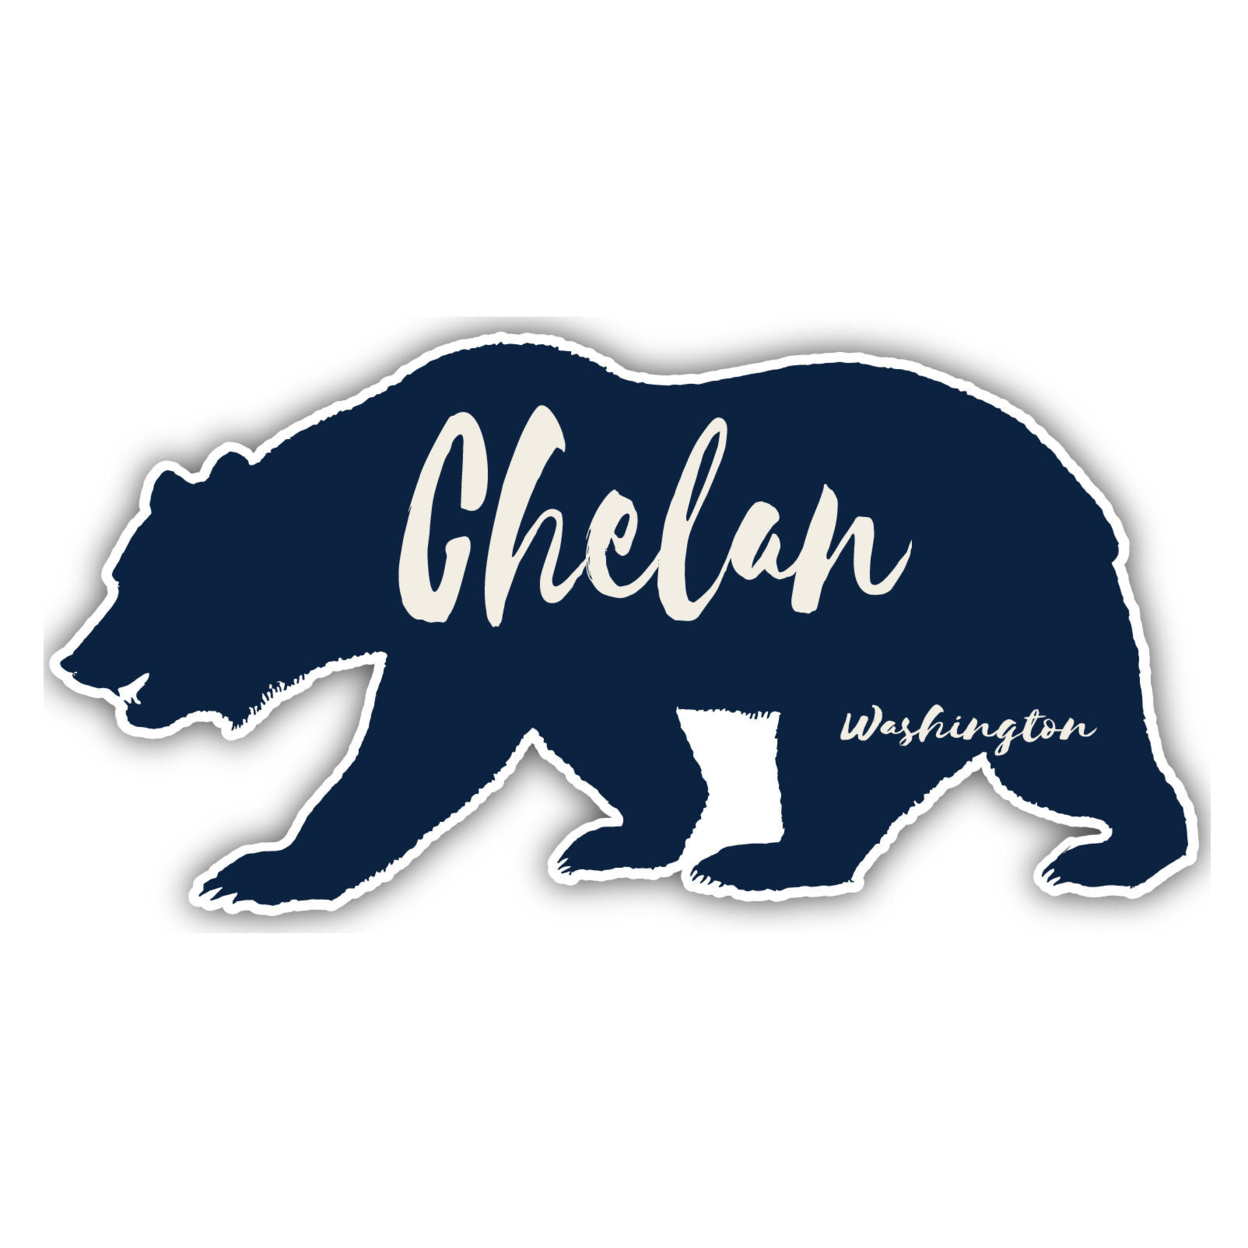 Chelan Washington Souvenir Decorative Stickers (Choose Theme And Size) - 4-Pack, 10-Inch, Tent